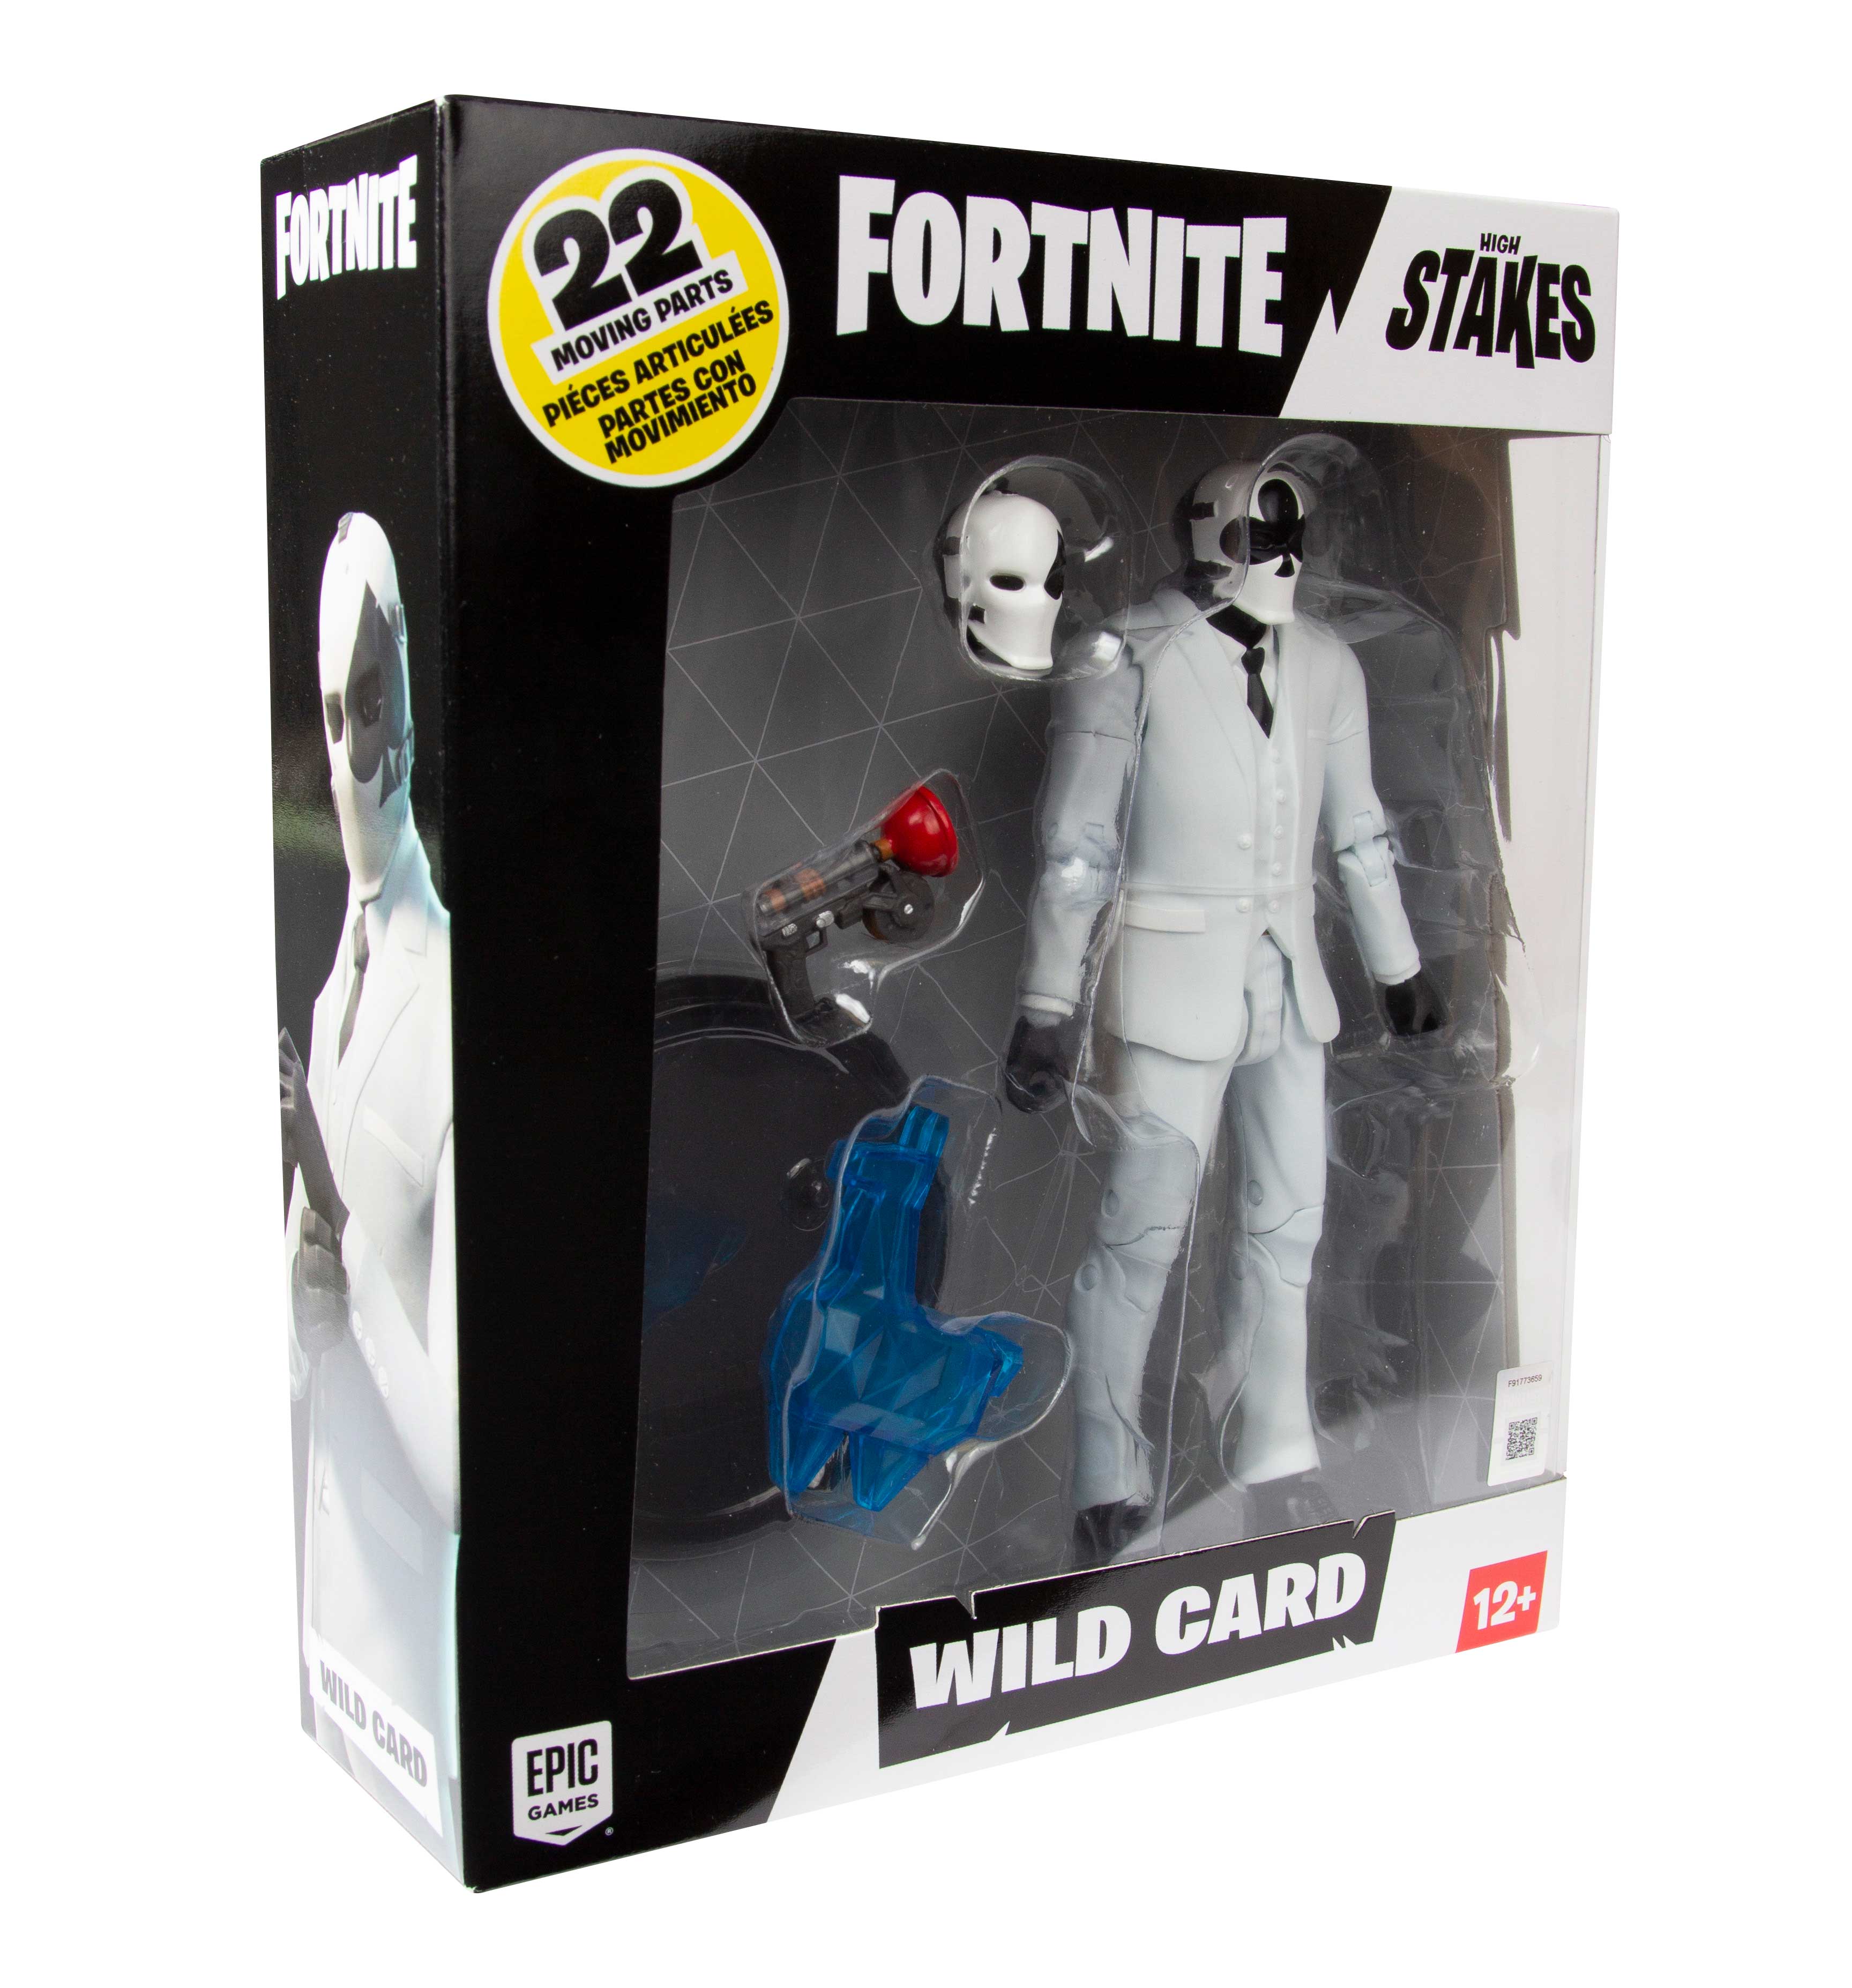 Fortnite WILD CARD Action Figur 17 cm Zubehör McFarlane Toys NEU OVP Base 